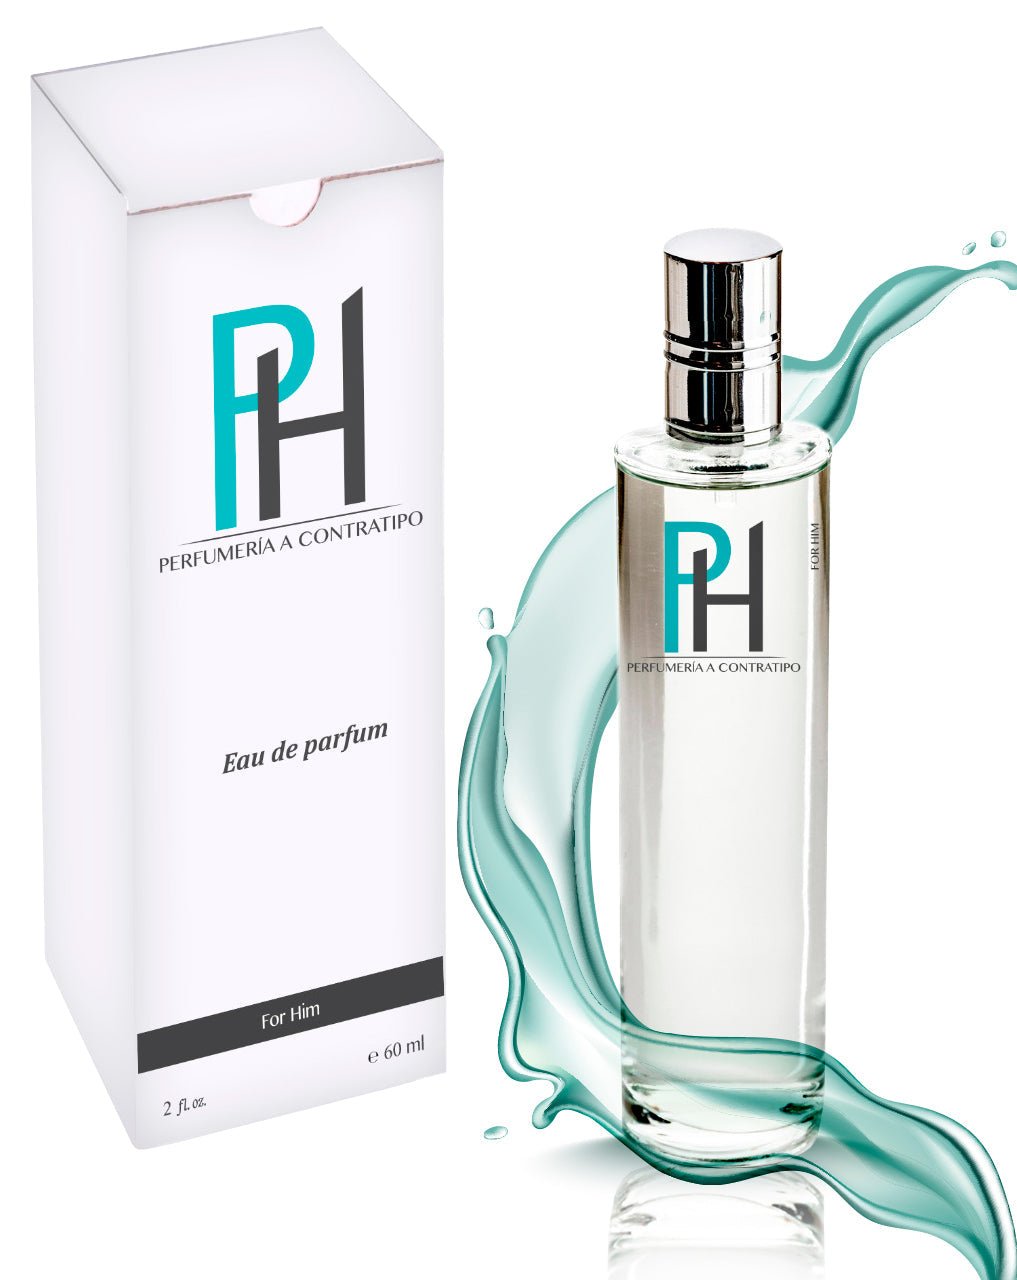 Perfume Lacoste Essential De 60 ml - PH Perfumería a Contratipo